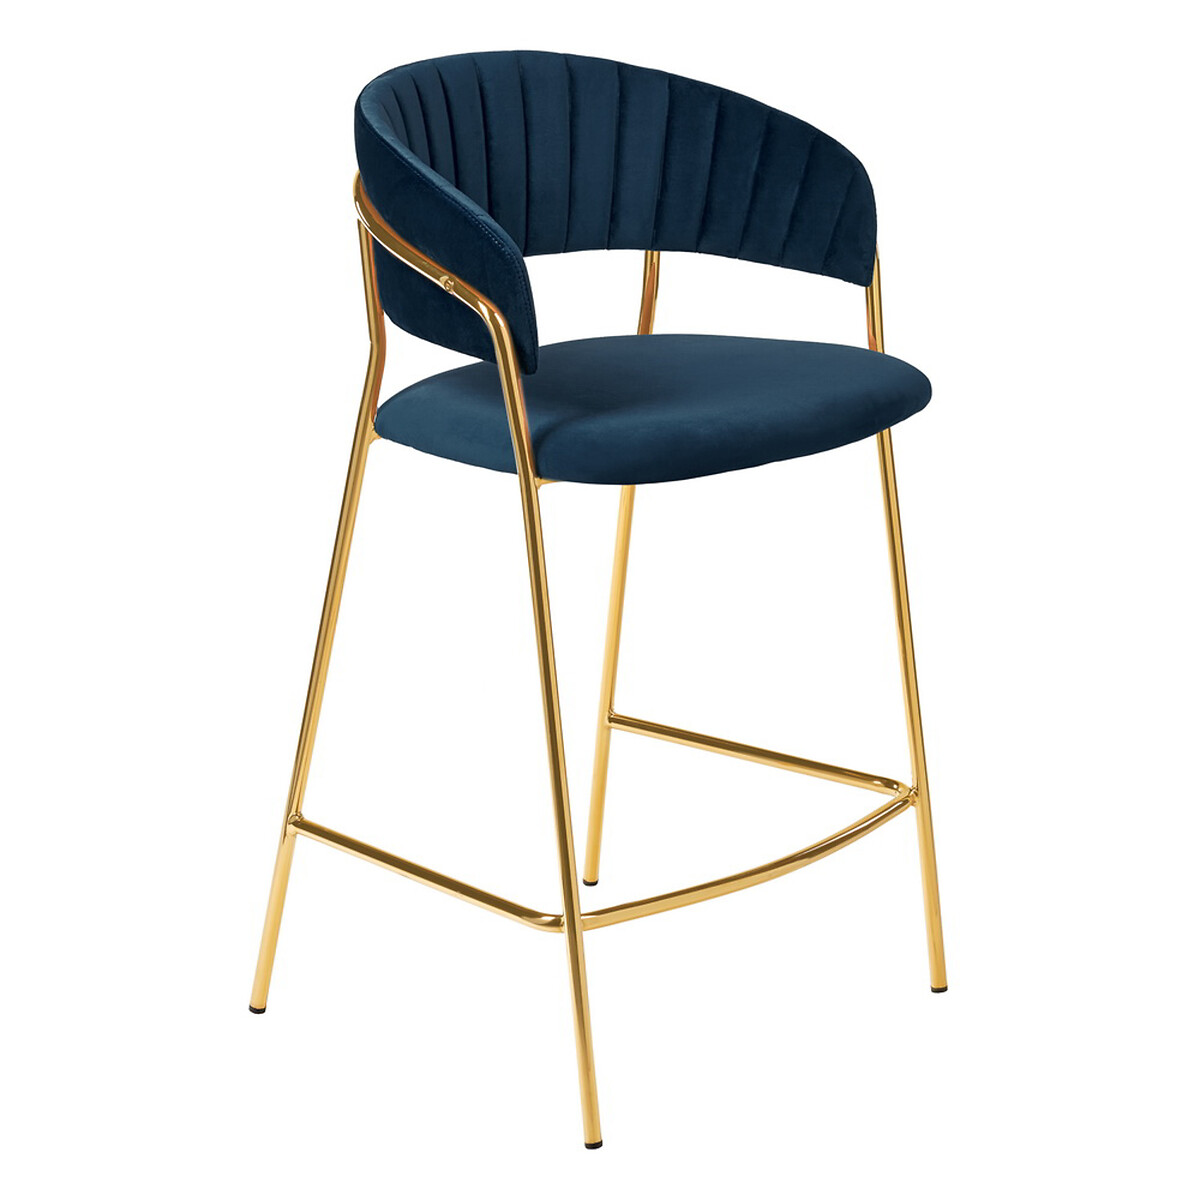 Стул полубарный Turin единый размер синий стул bradex полубарный turin бирюзовый с золотыми ножками